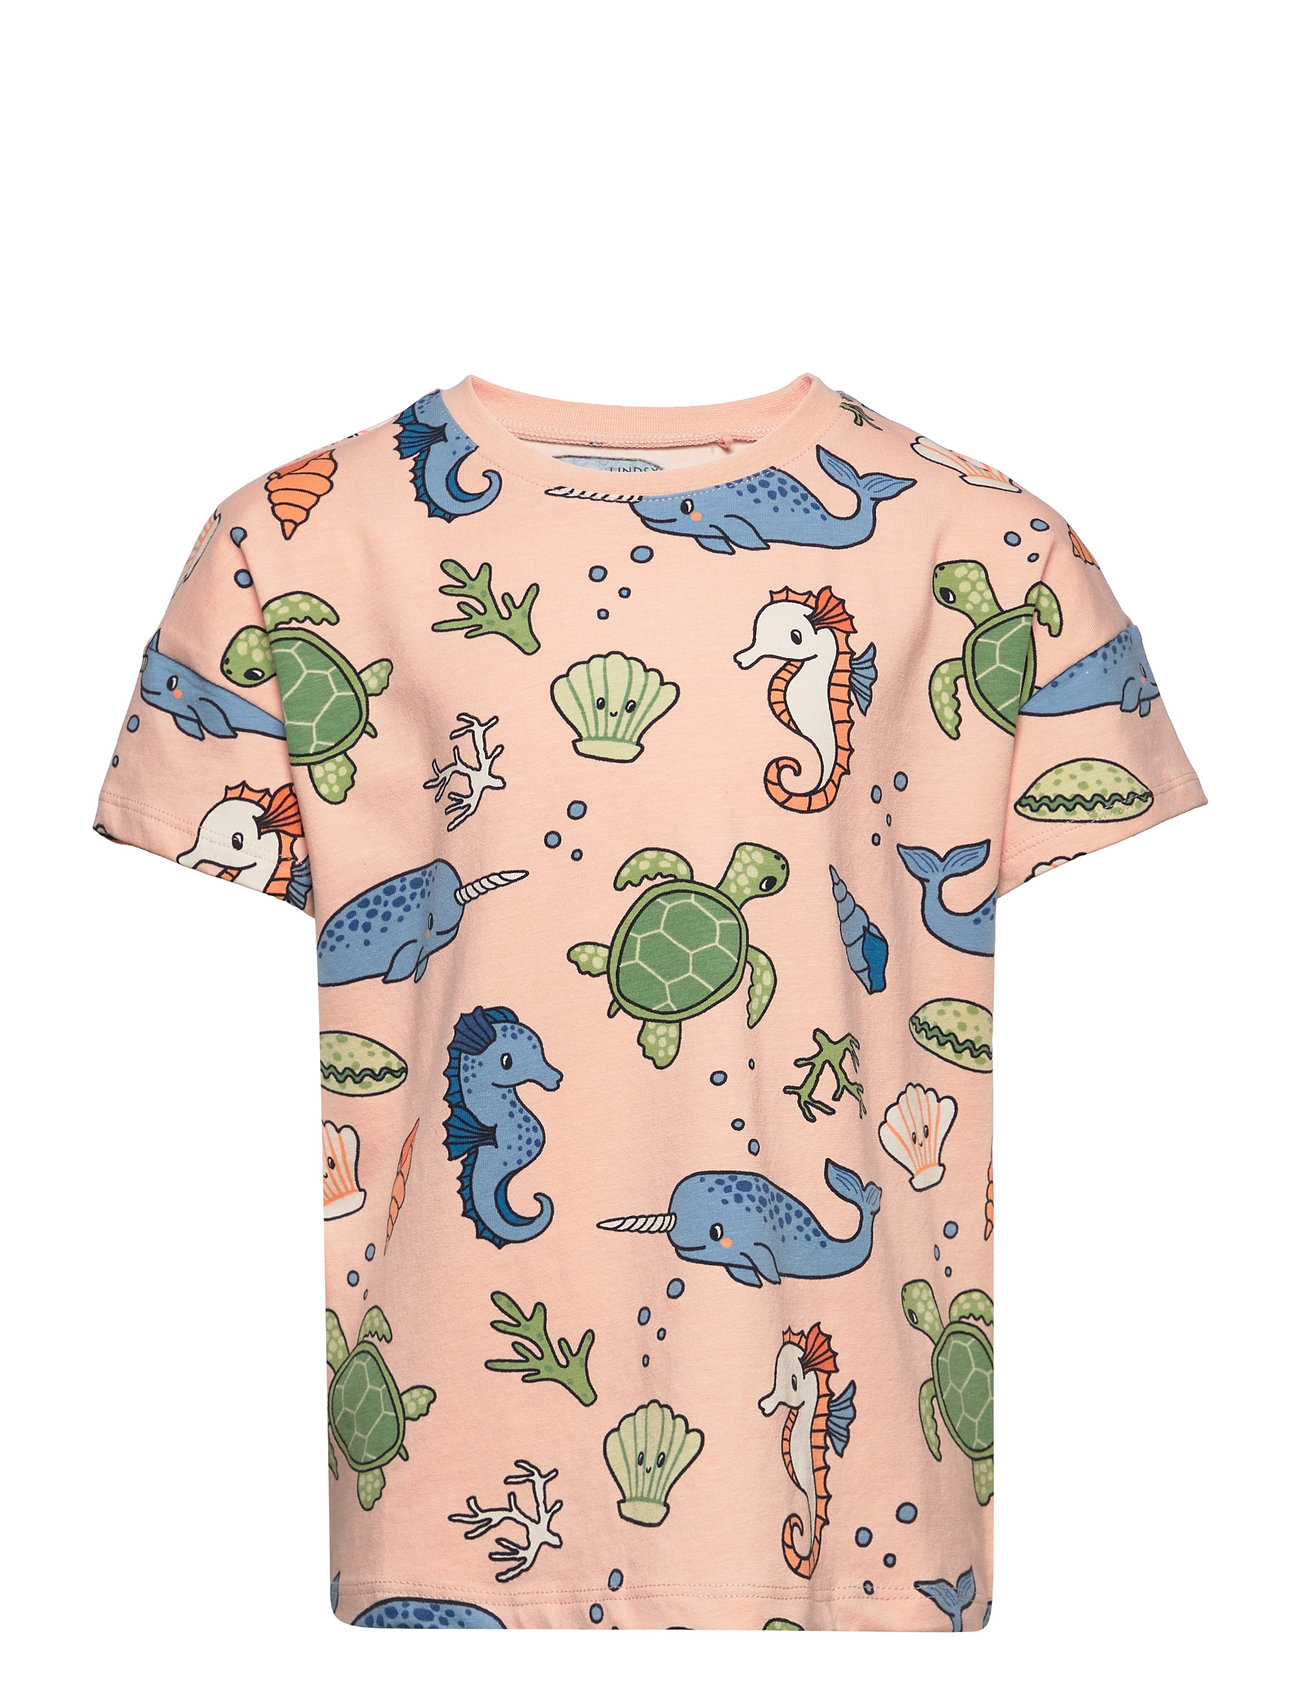 Top Ocean Aop T-shirts Short-sleeved Multi/mönstrad Lindex